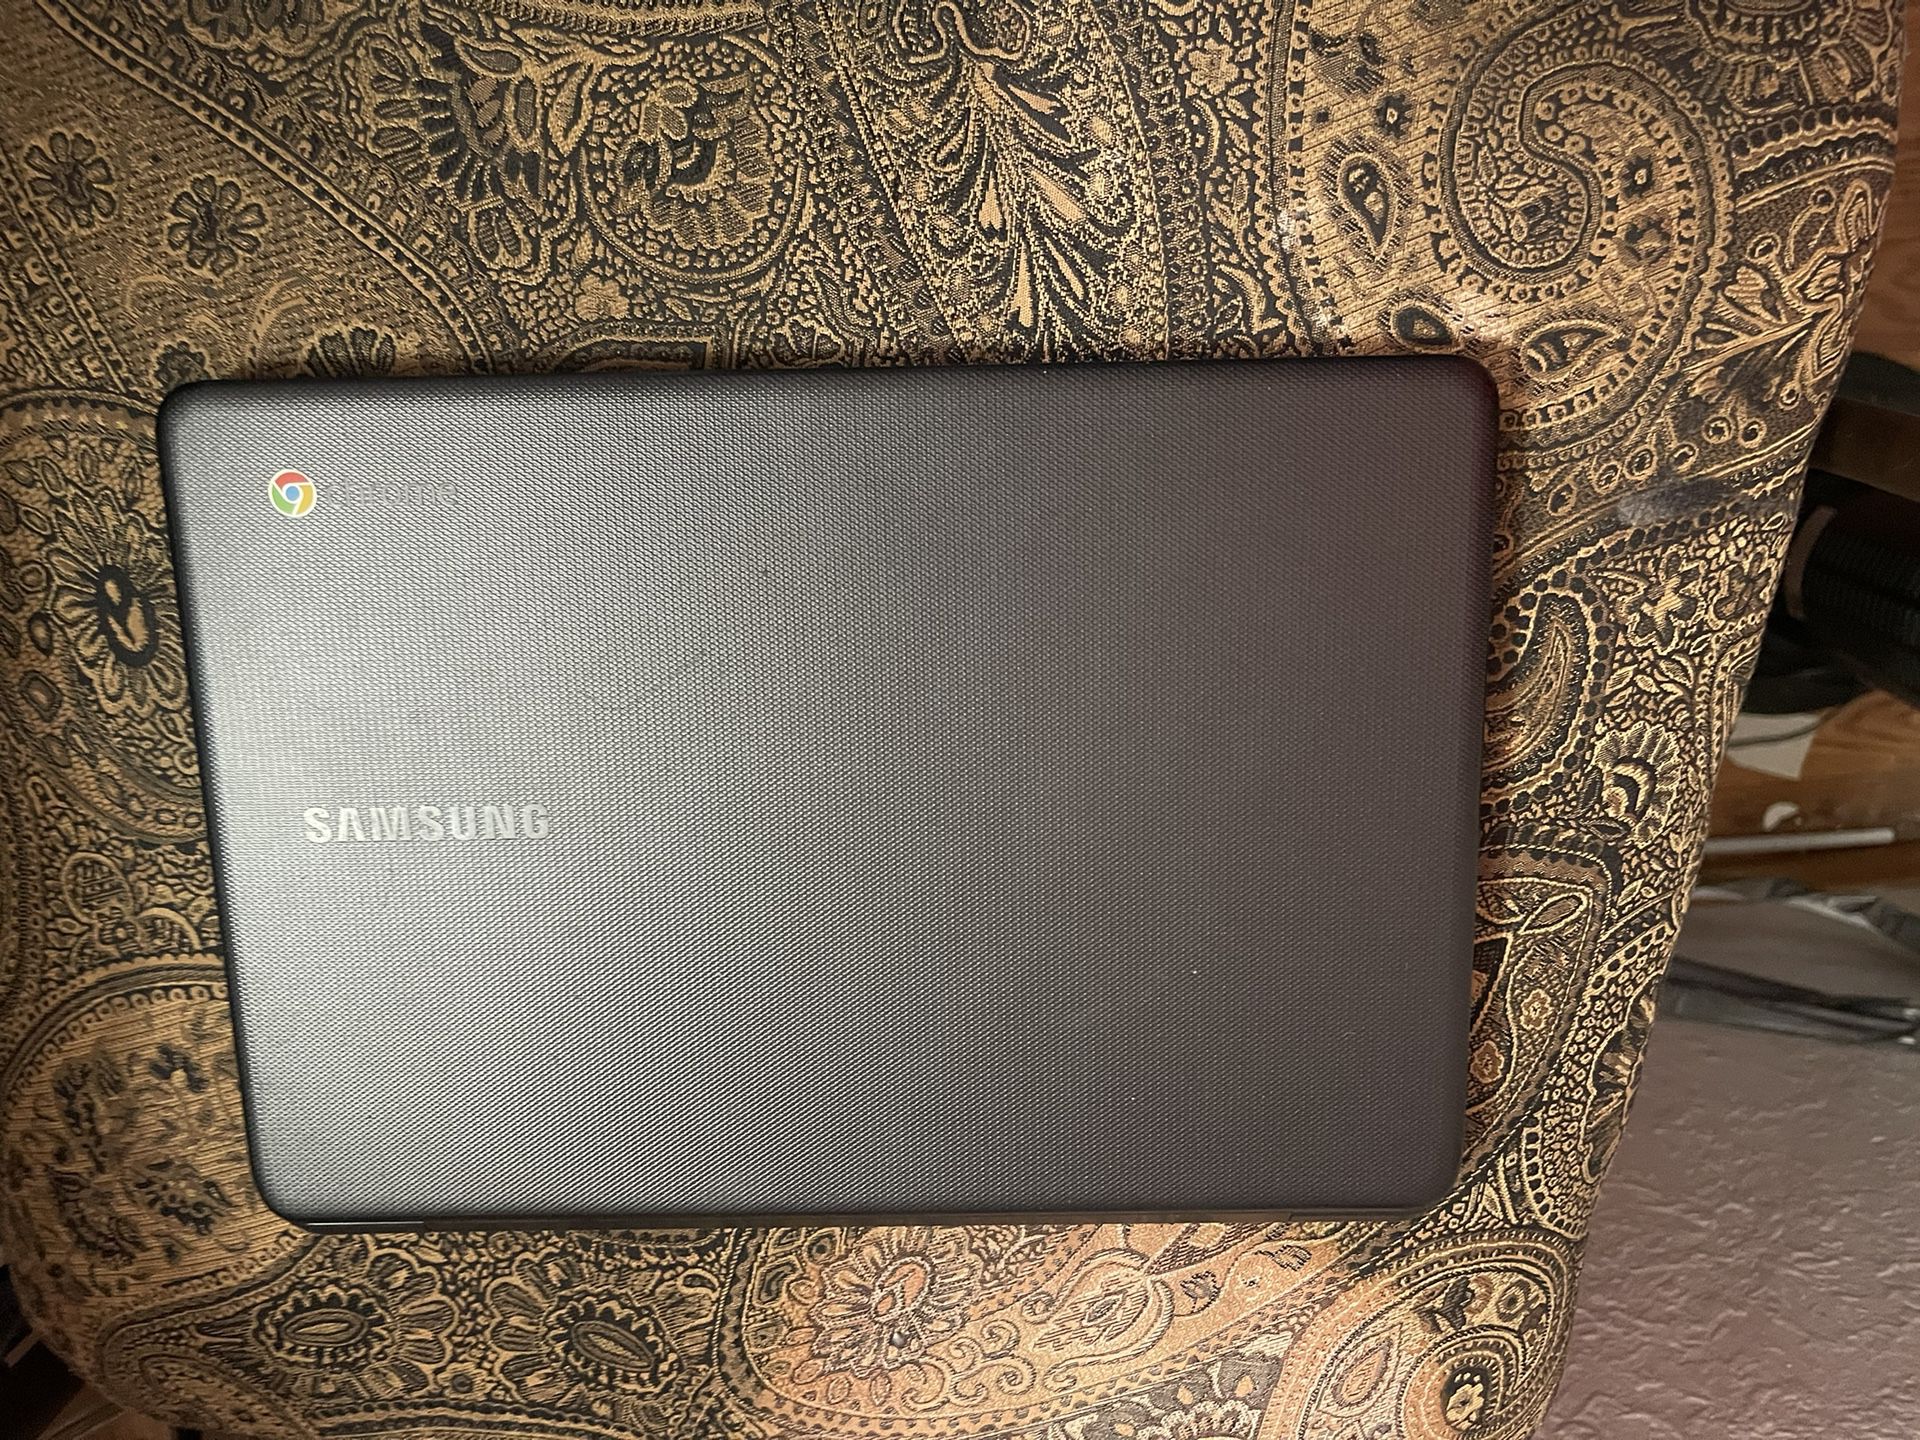 Samsung Chromebook,black, Laptop 